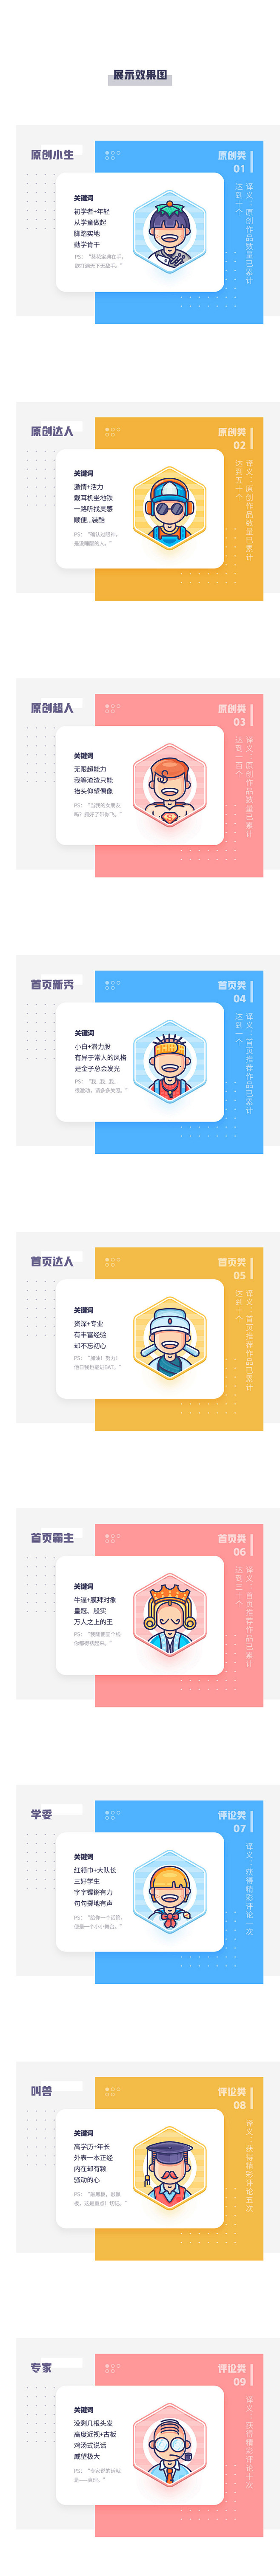 UI中国勋章设计